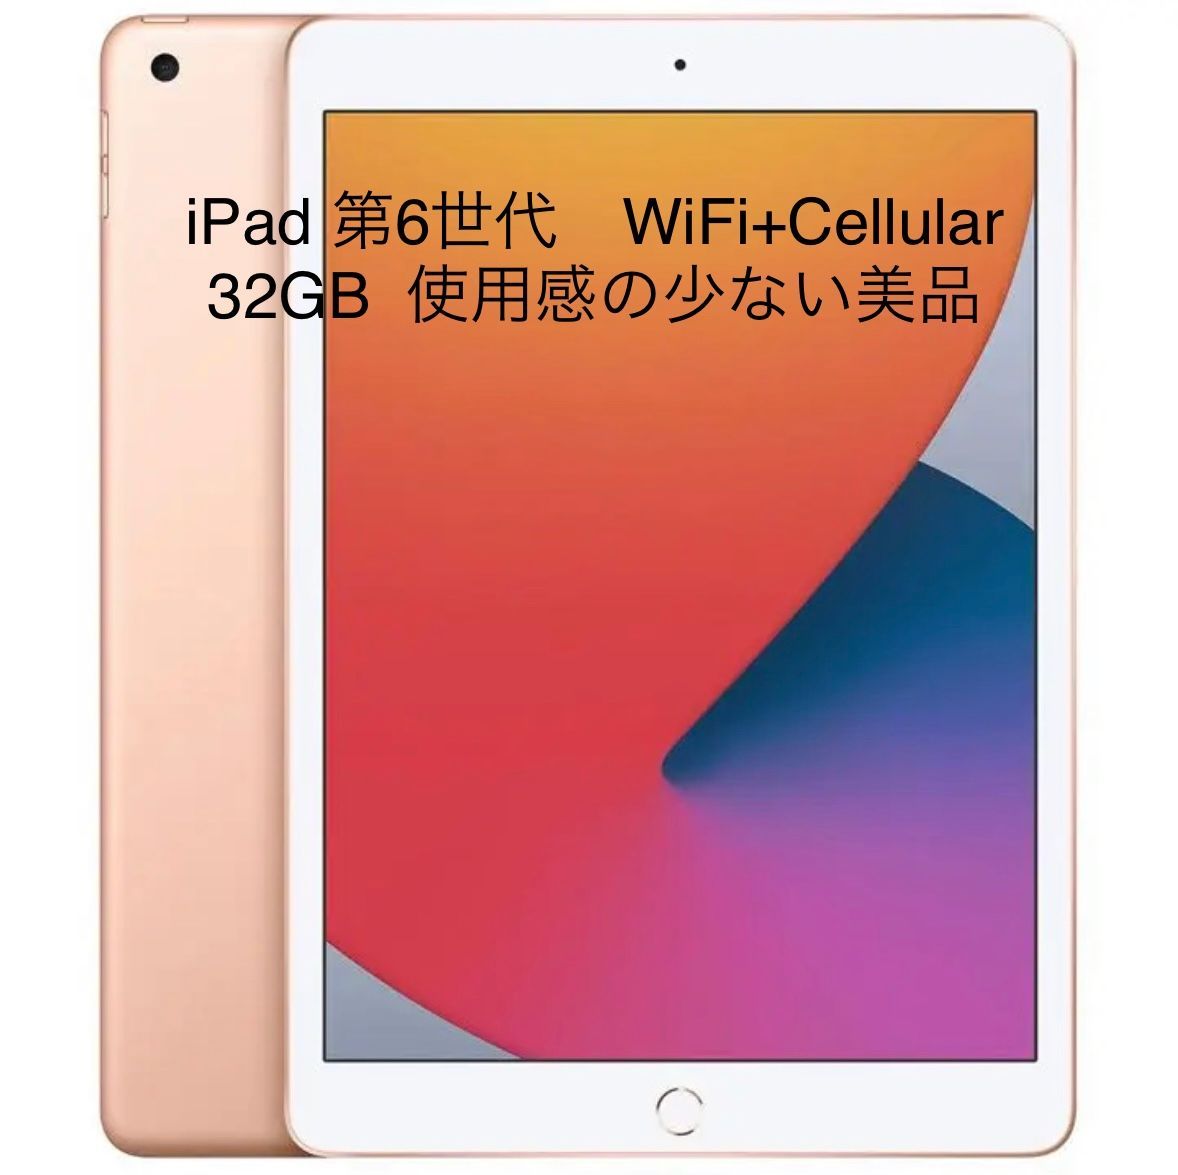 美品 iPad mini4 Wi-Fi Cellular 32GB Gold